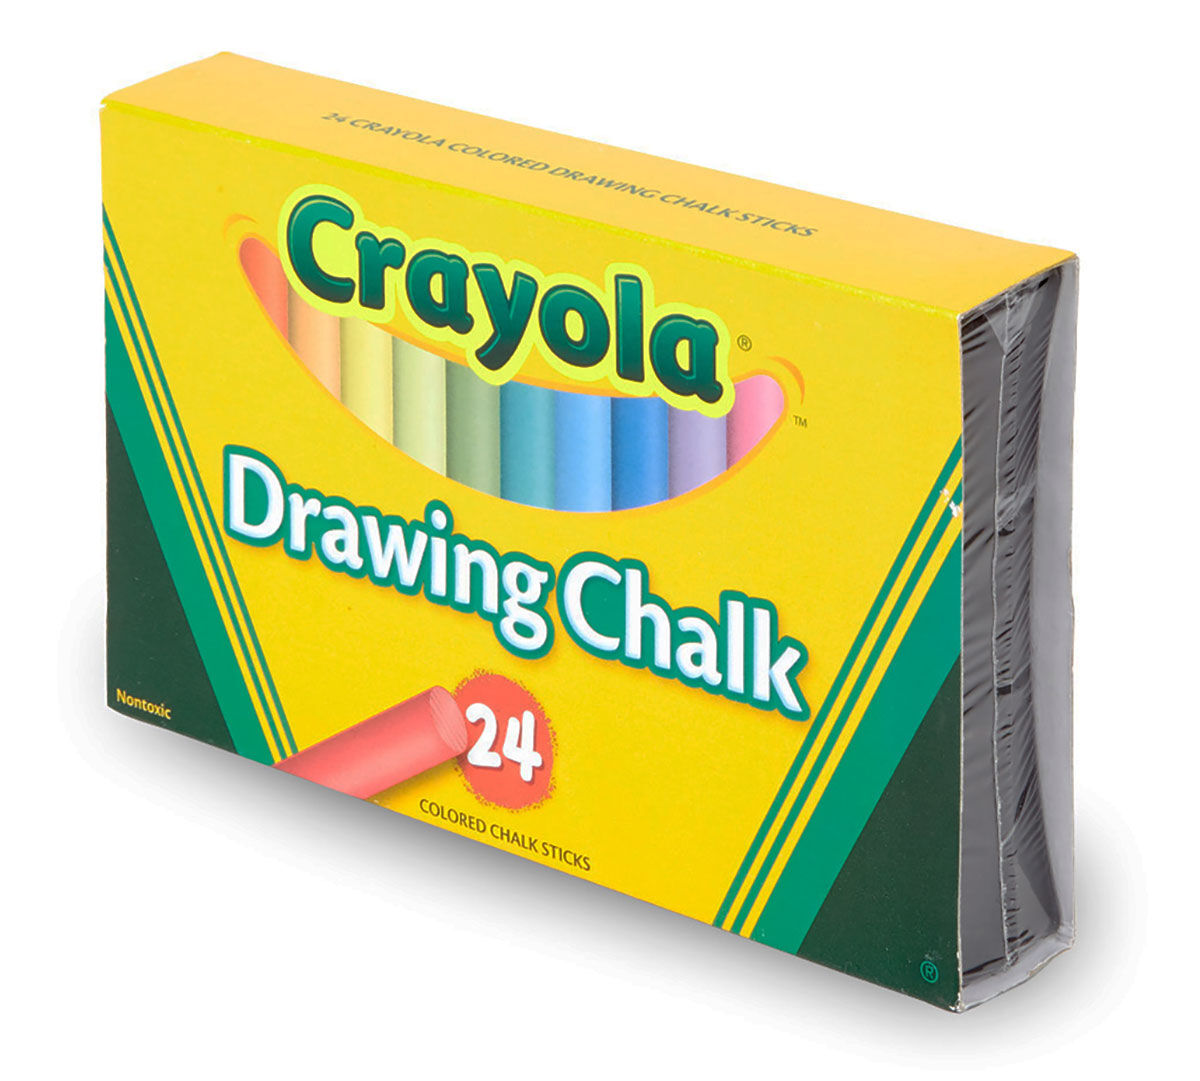 Crayola Drawing Chalk, Craft Supplies, 24 Count Crayola